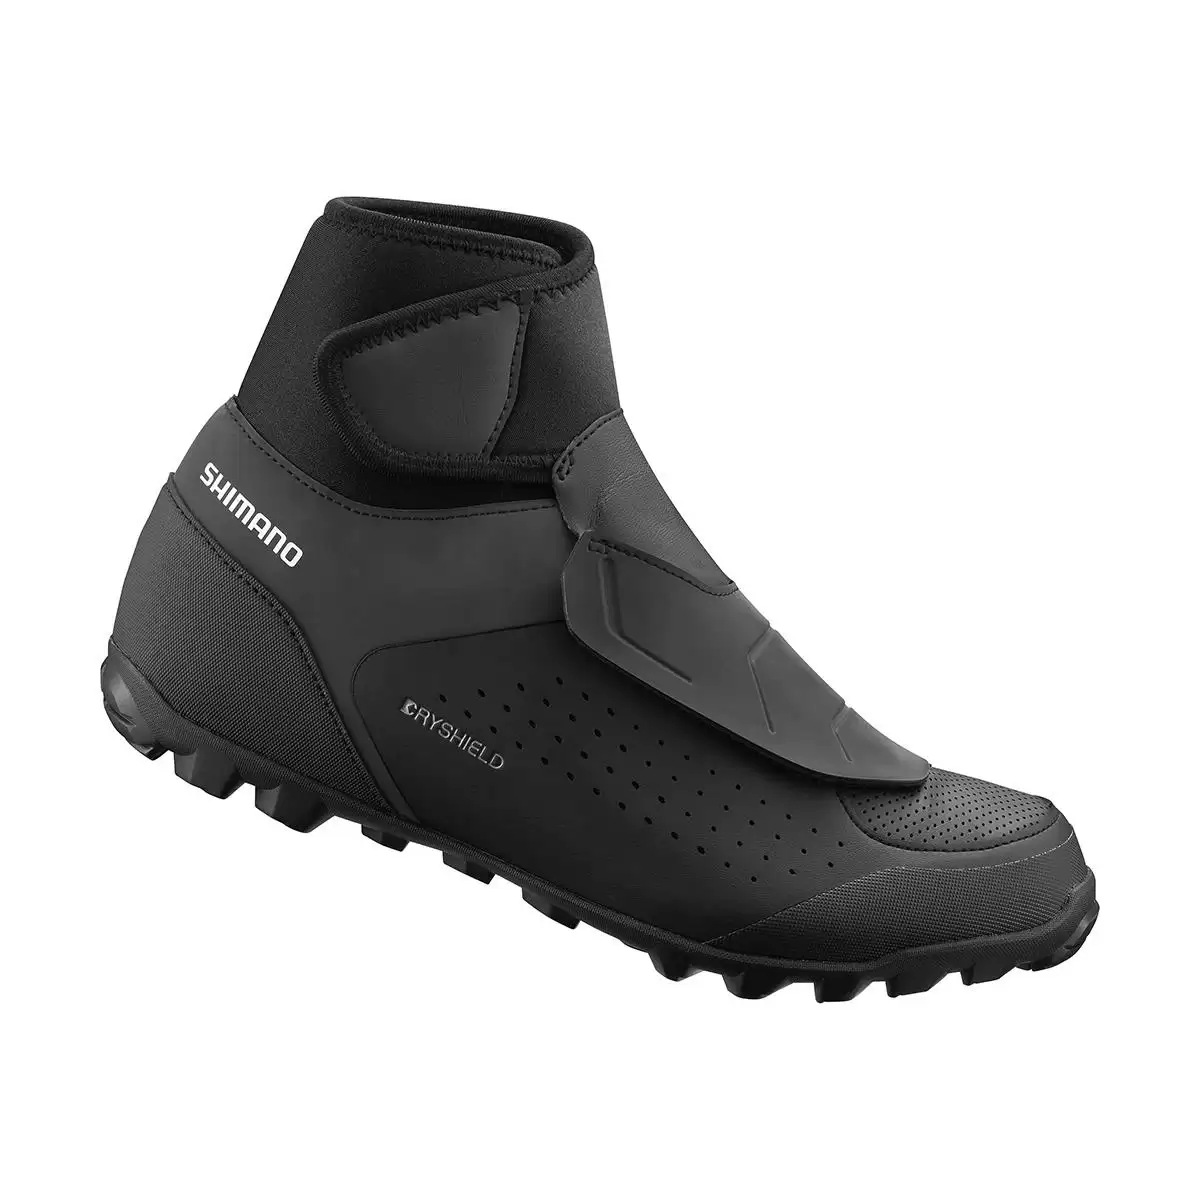 MTB Winter Shoes SH-MW501SL1 Black Size 38 - image